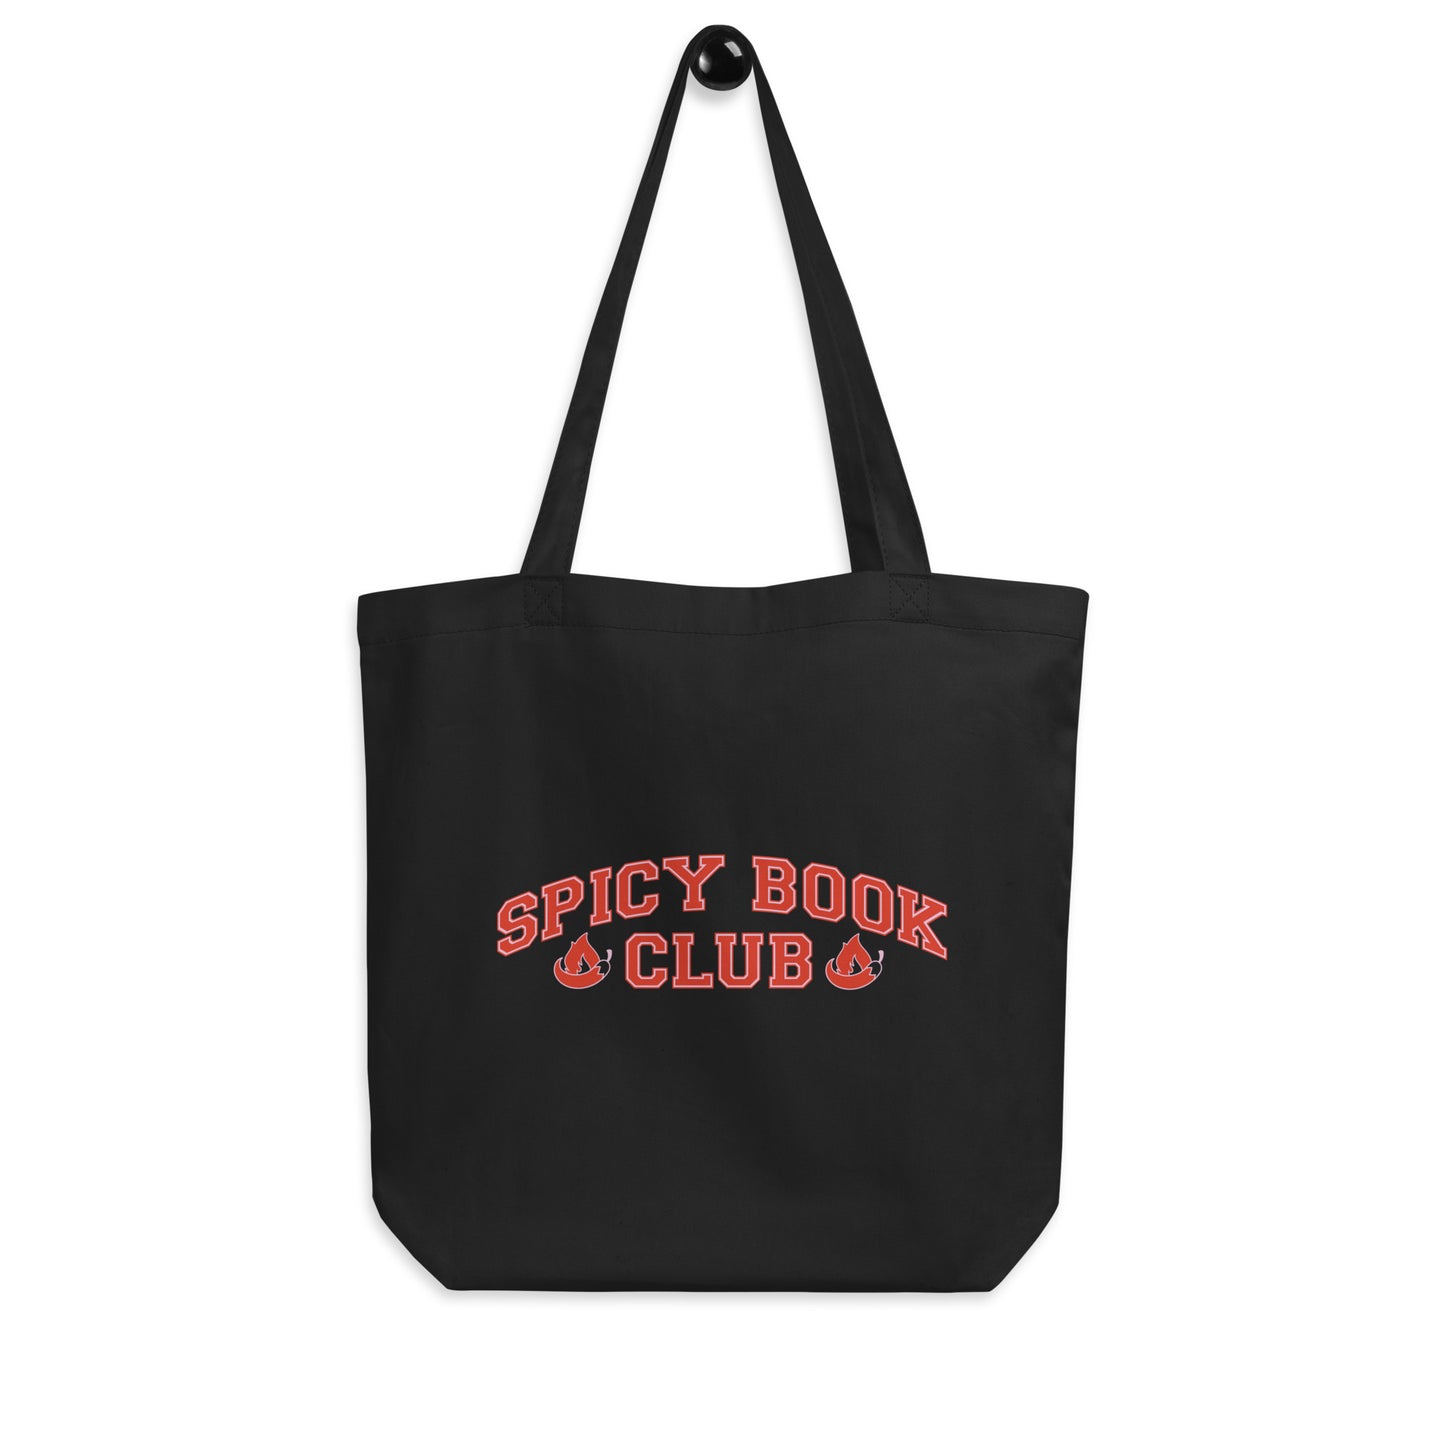 Spicy Book Club Eco Tote Bag